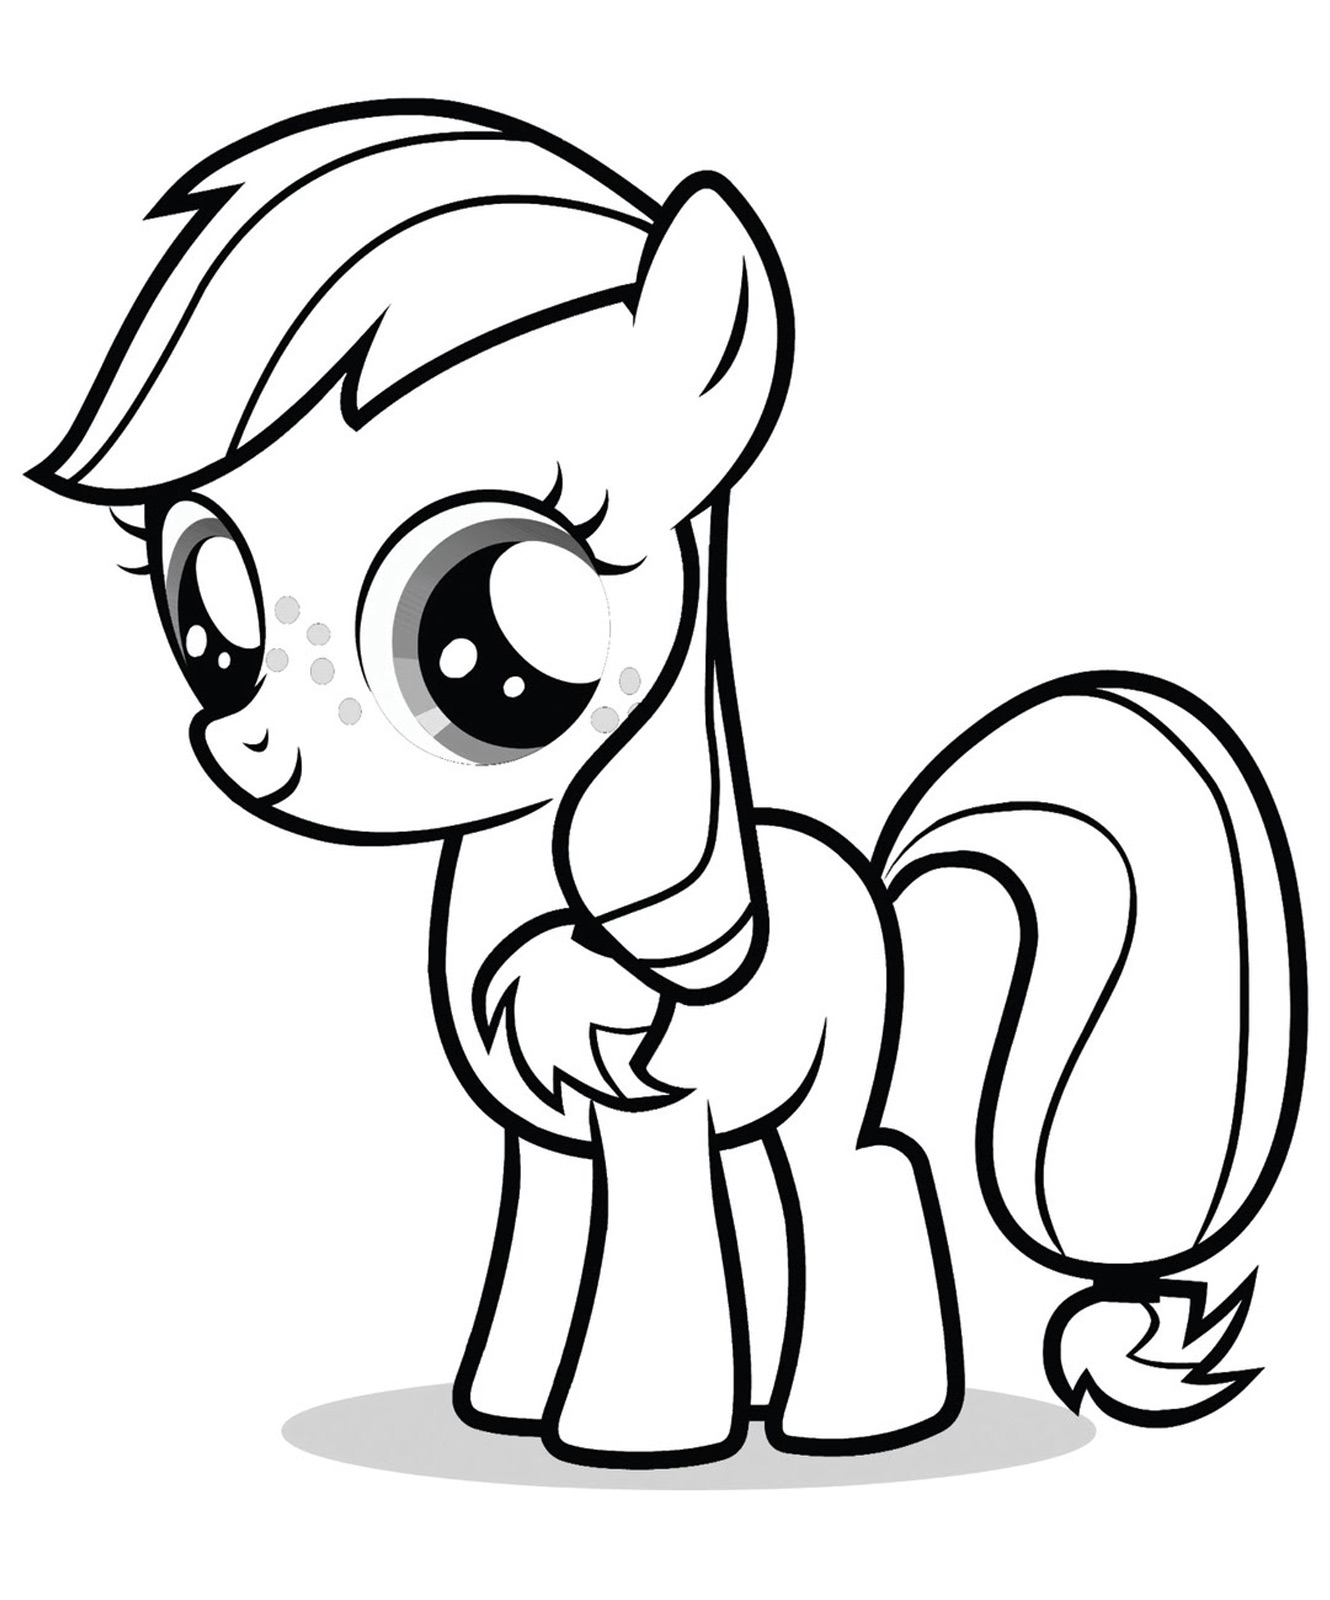 A little Pony Princess version 2010 to color